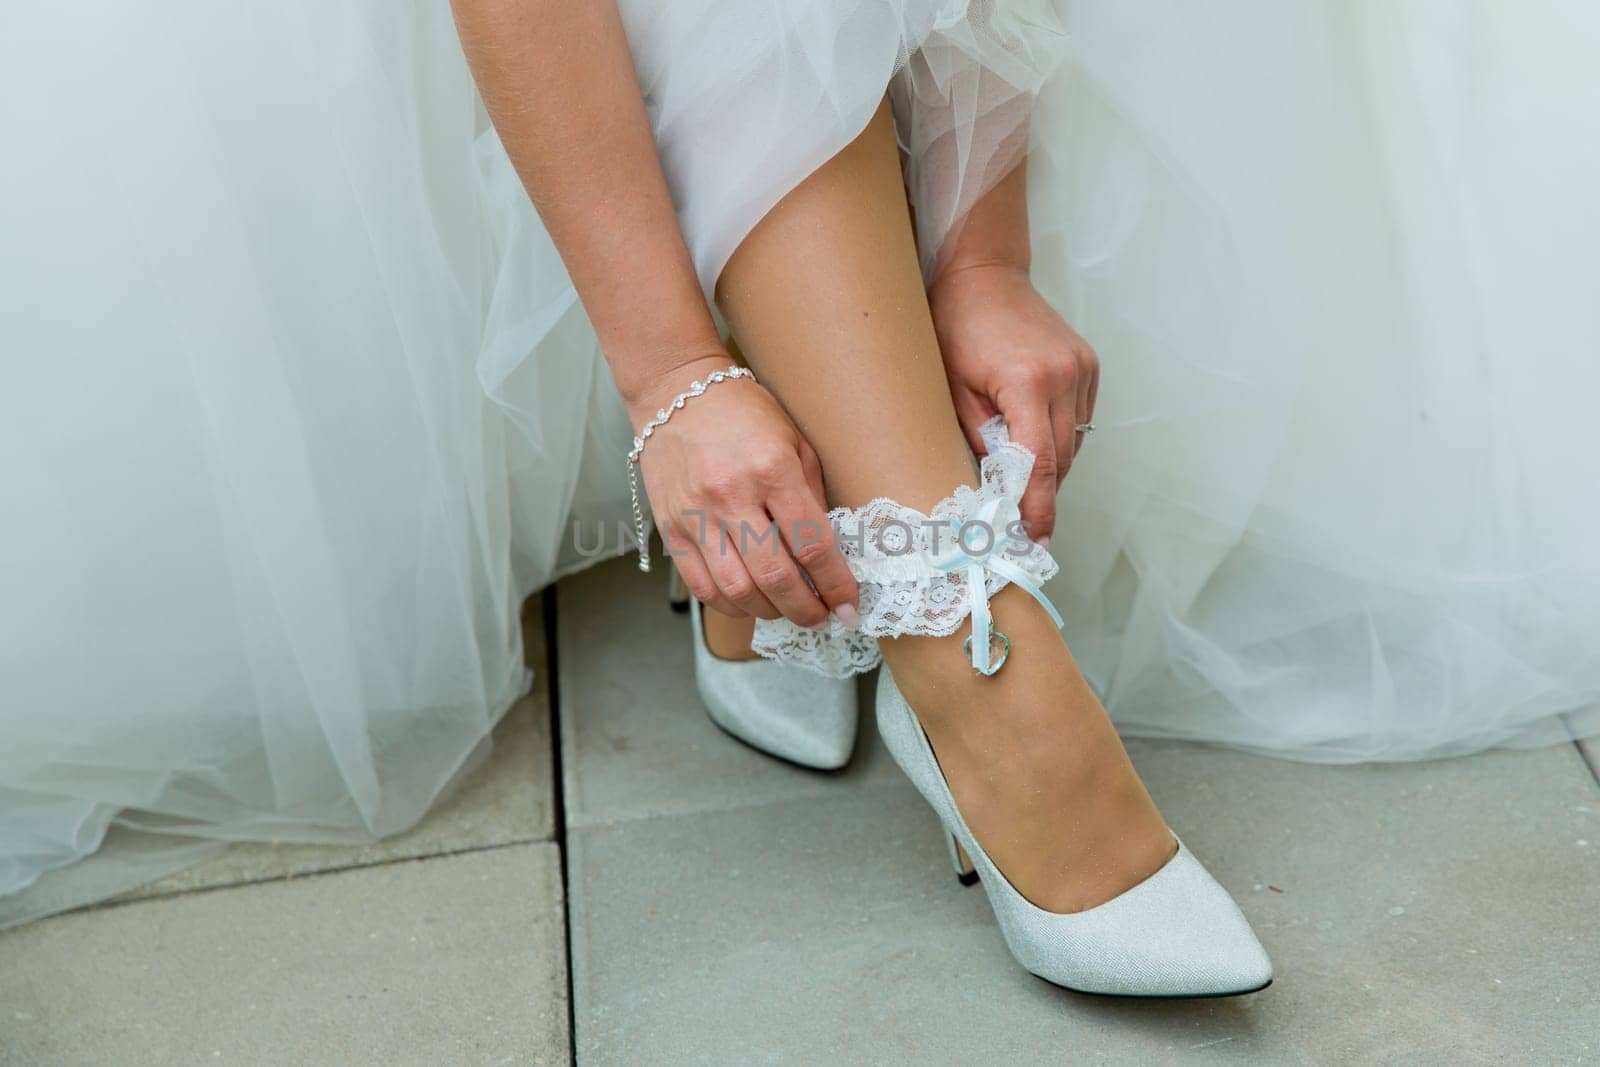 The bride adjusts the garter on her leg. by leonik